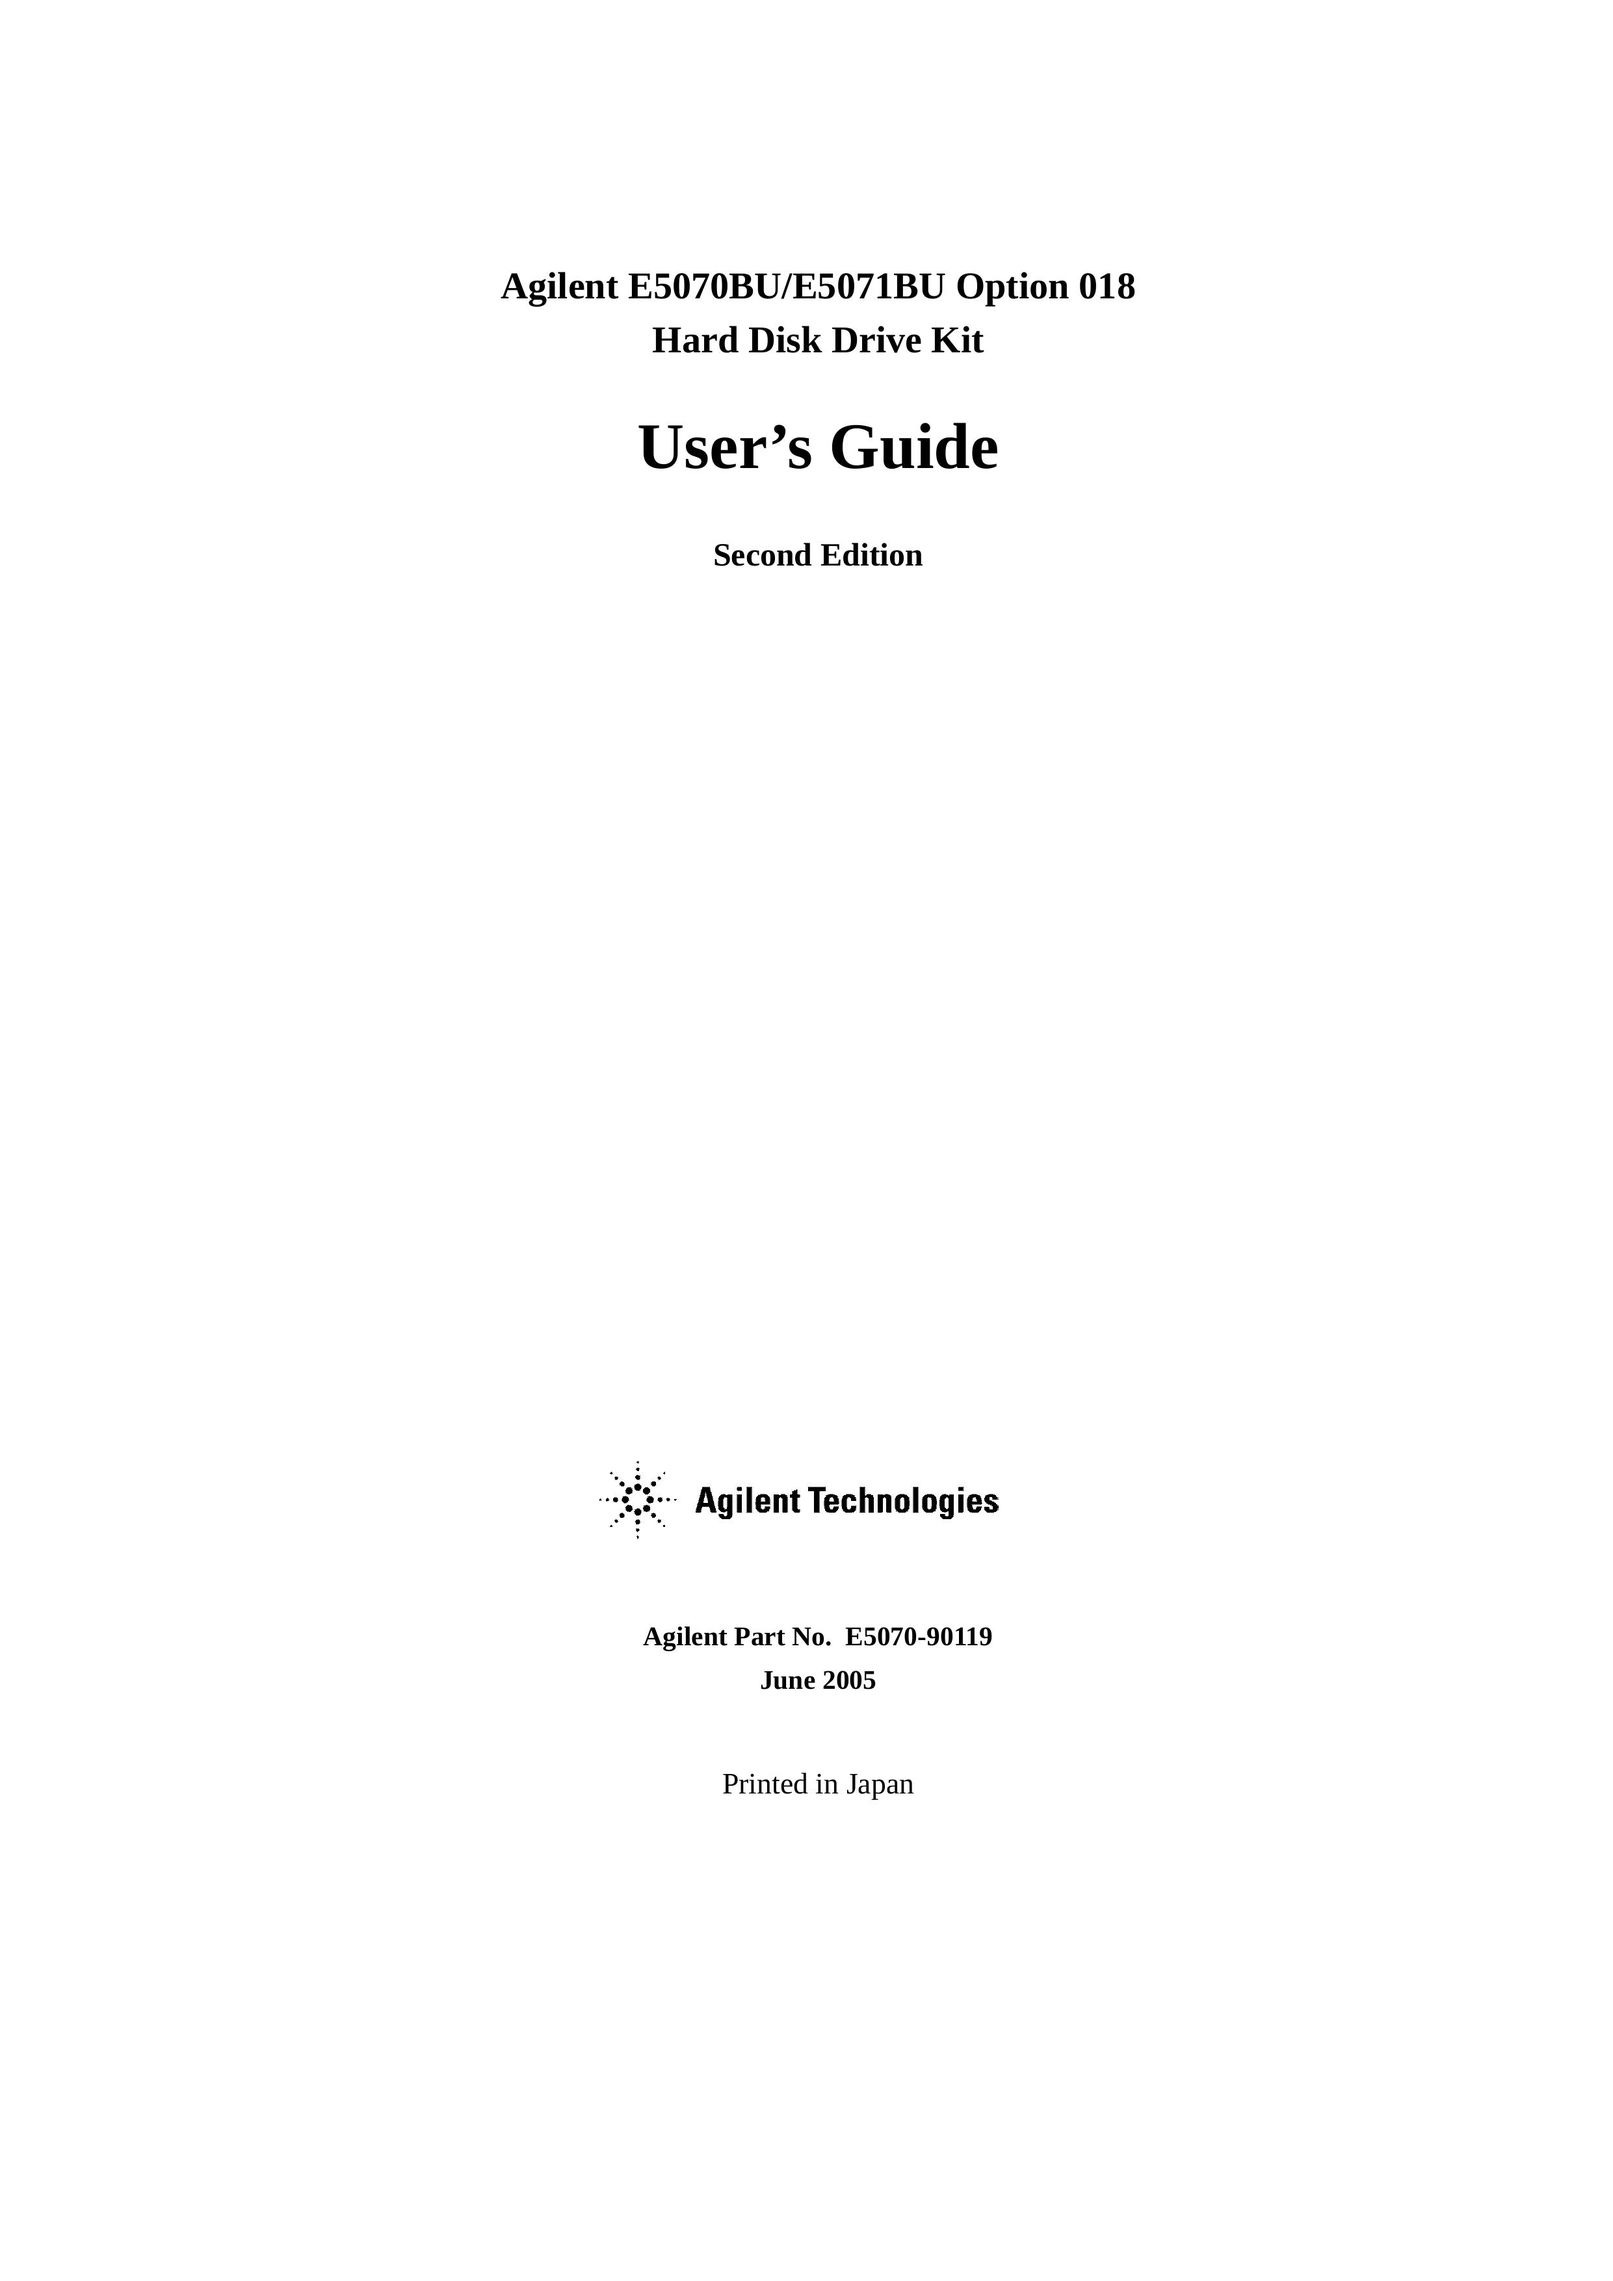 Agilent Technologies E5071BU Computer Drive User Manual